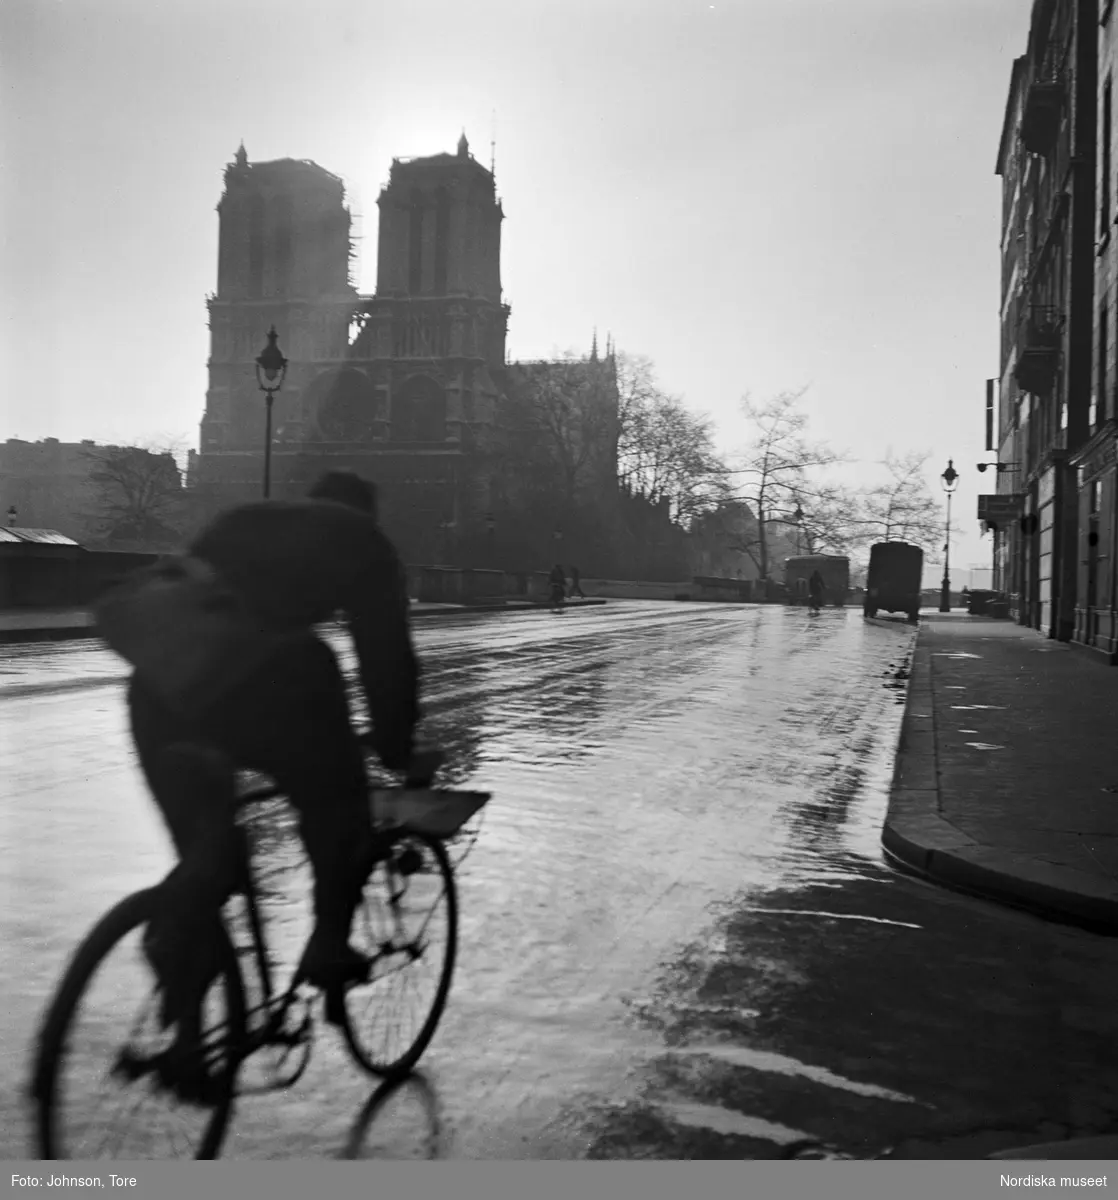 Cyklist, Notre Dame i bakgrunden. Paris.